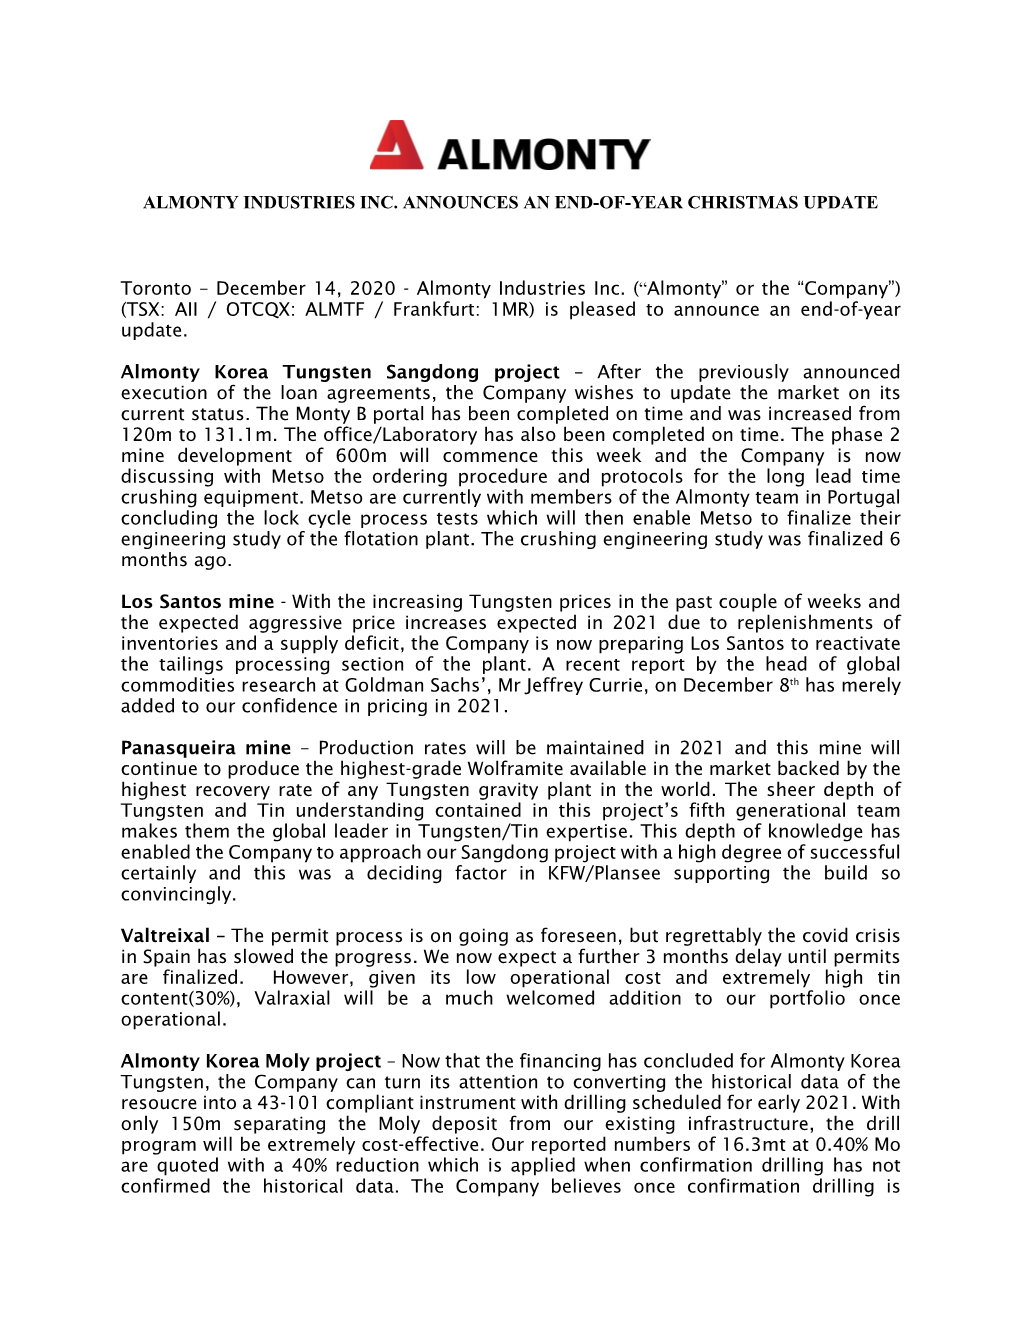 December 14, 2020 - Almonty Industries Inc